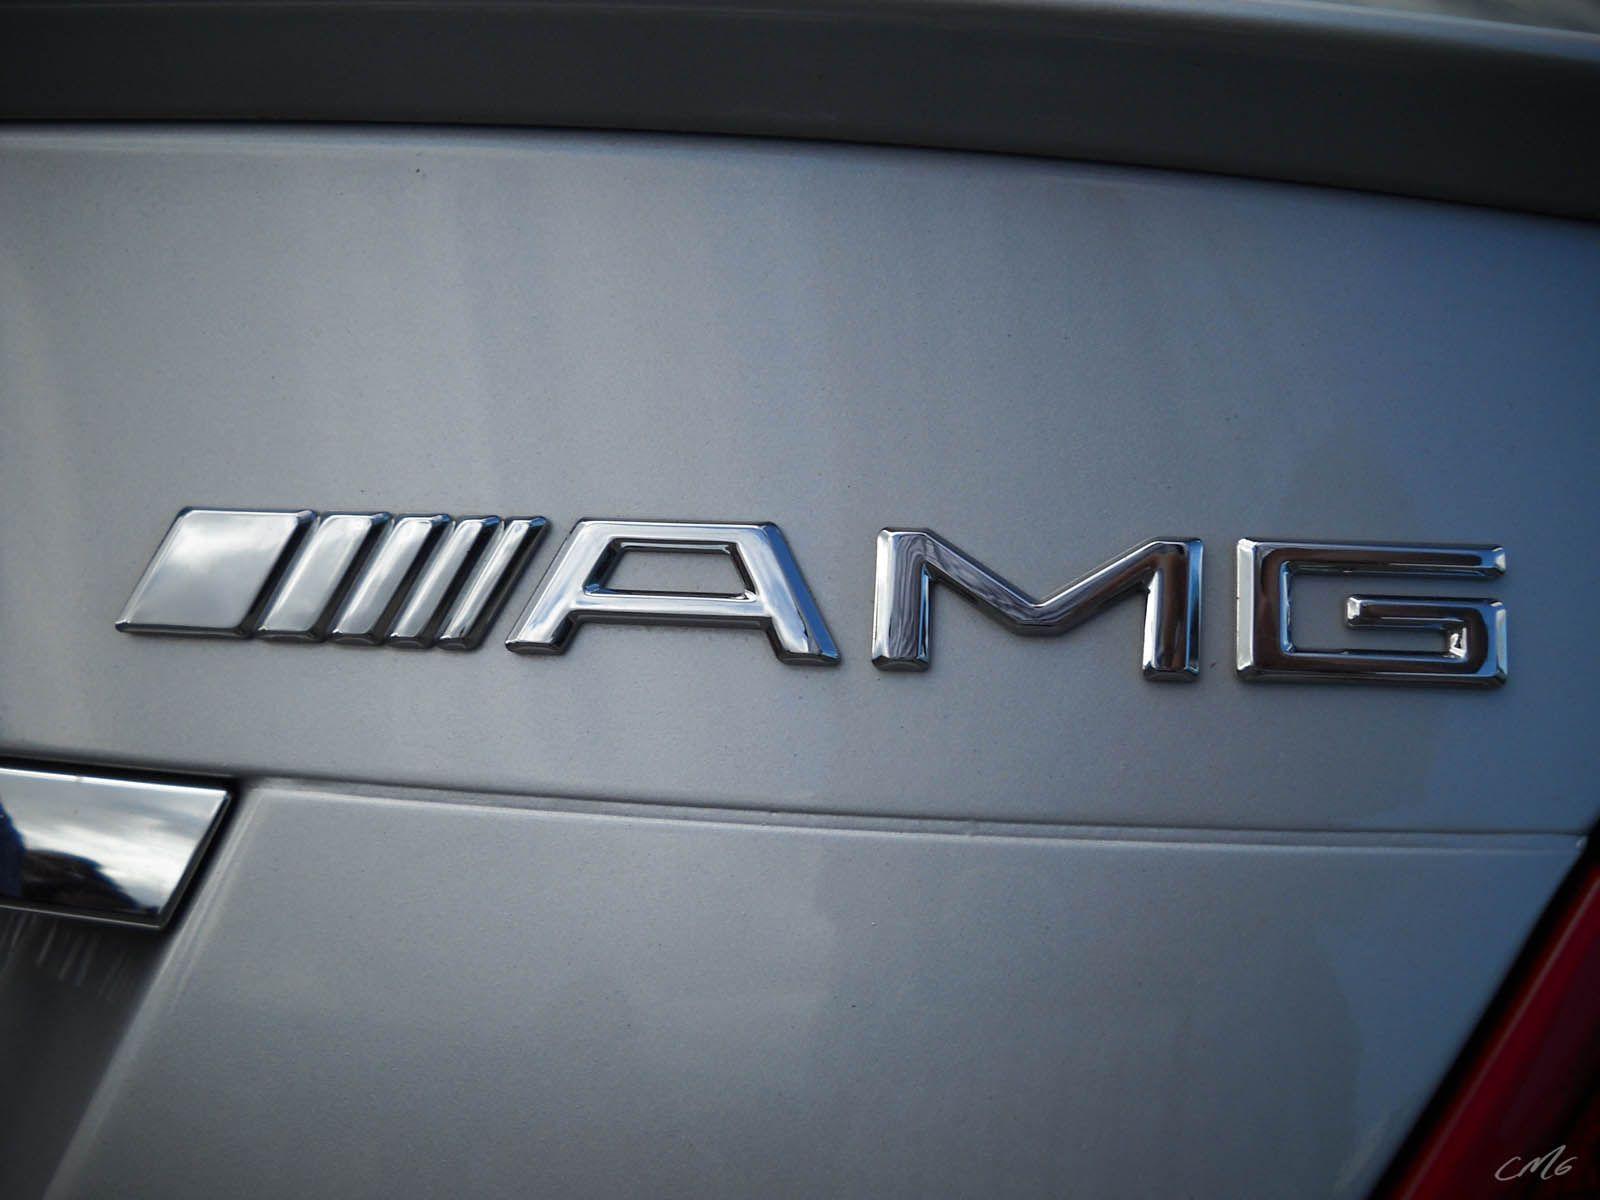 Original Mercedes AMG Logo - File:Mercedes-AMG logo, carrotmadman6-101.jpg - Wikimedia Commons